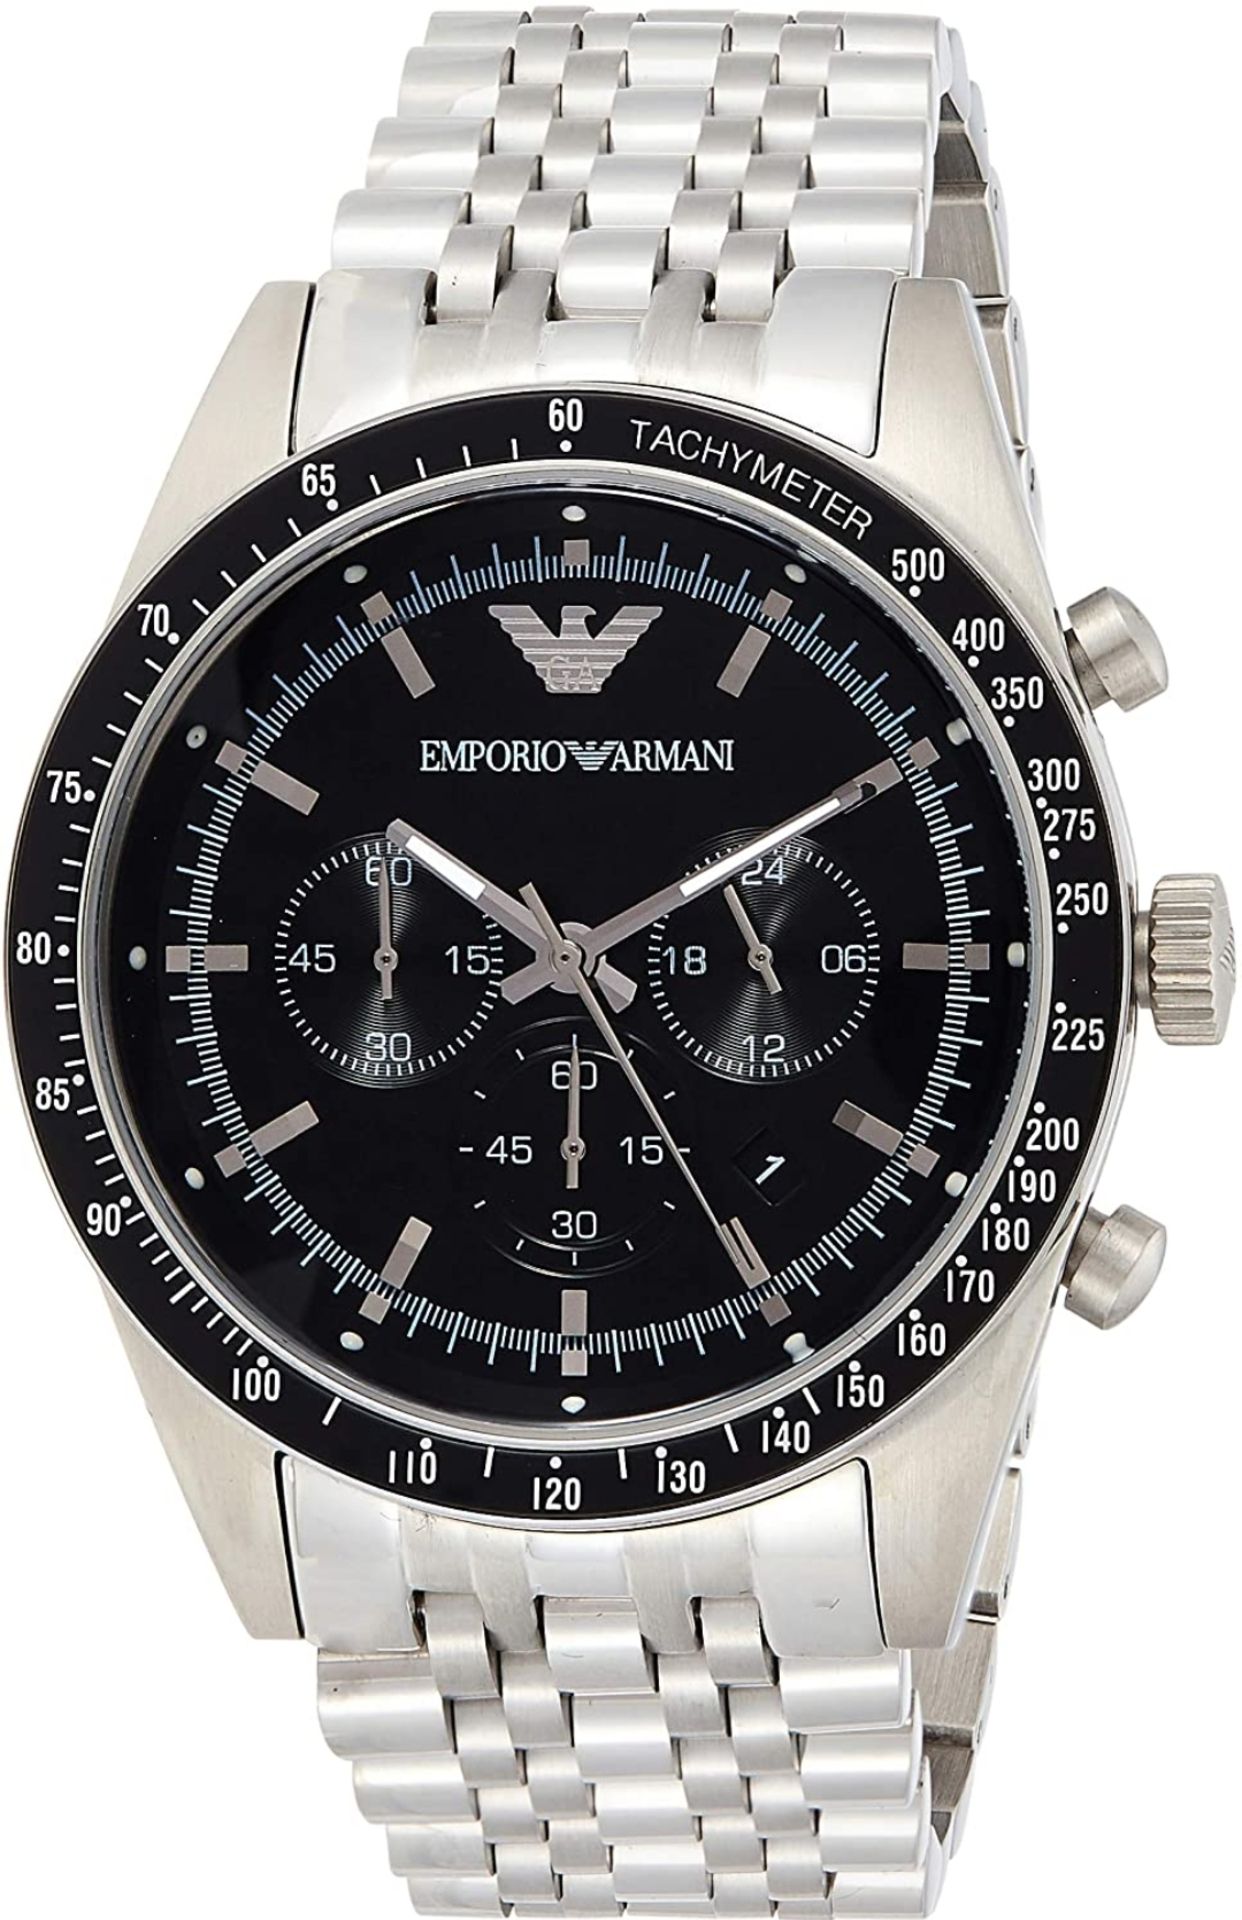 Emporio Armani AR5988 Men's Tazio Black Dial Silver Bracelet Chronograph Watch - Image 6 of 8